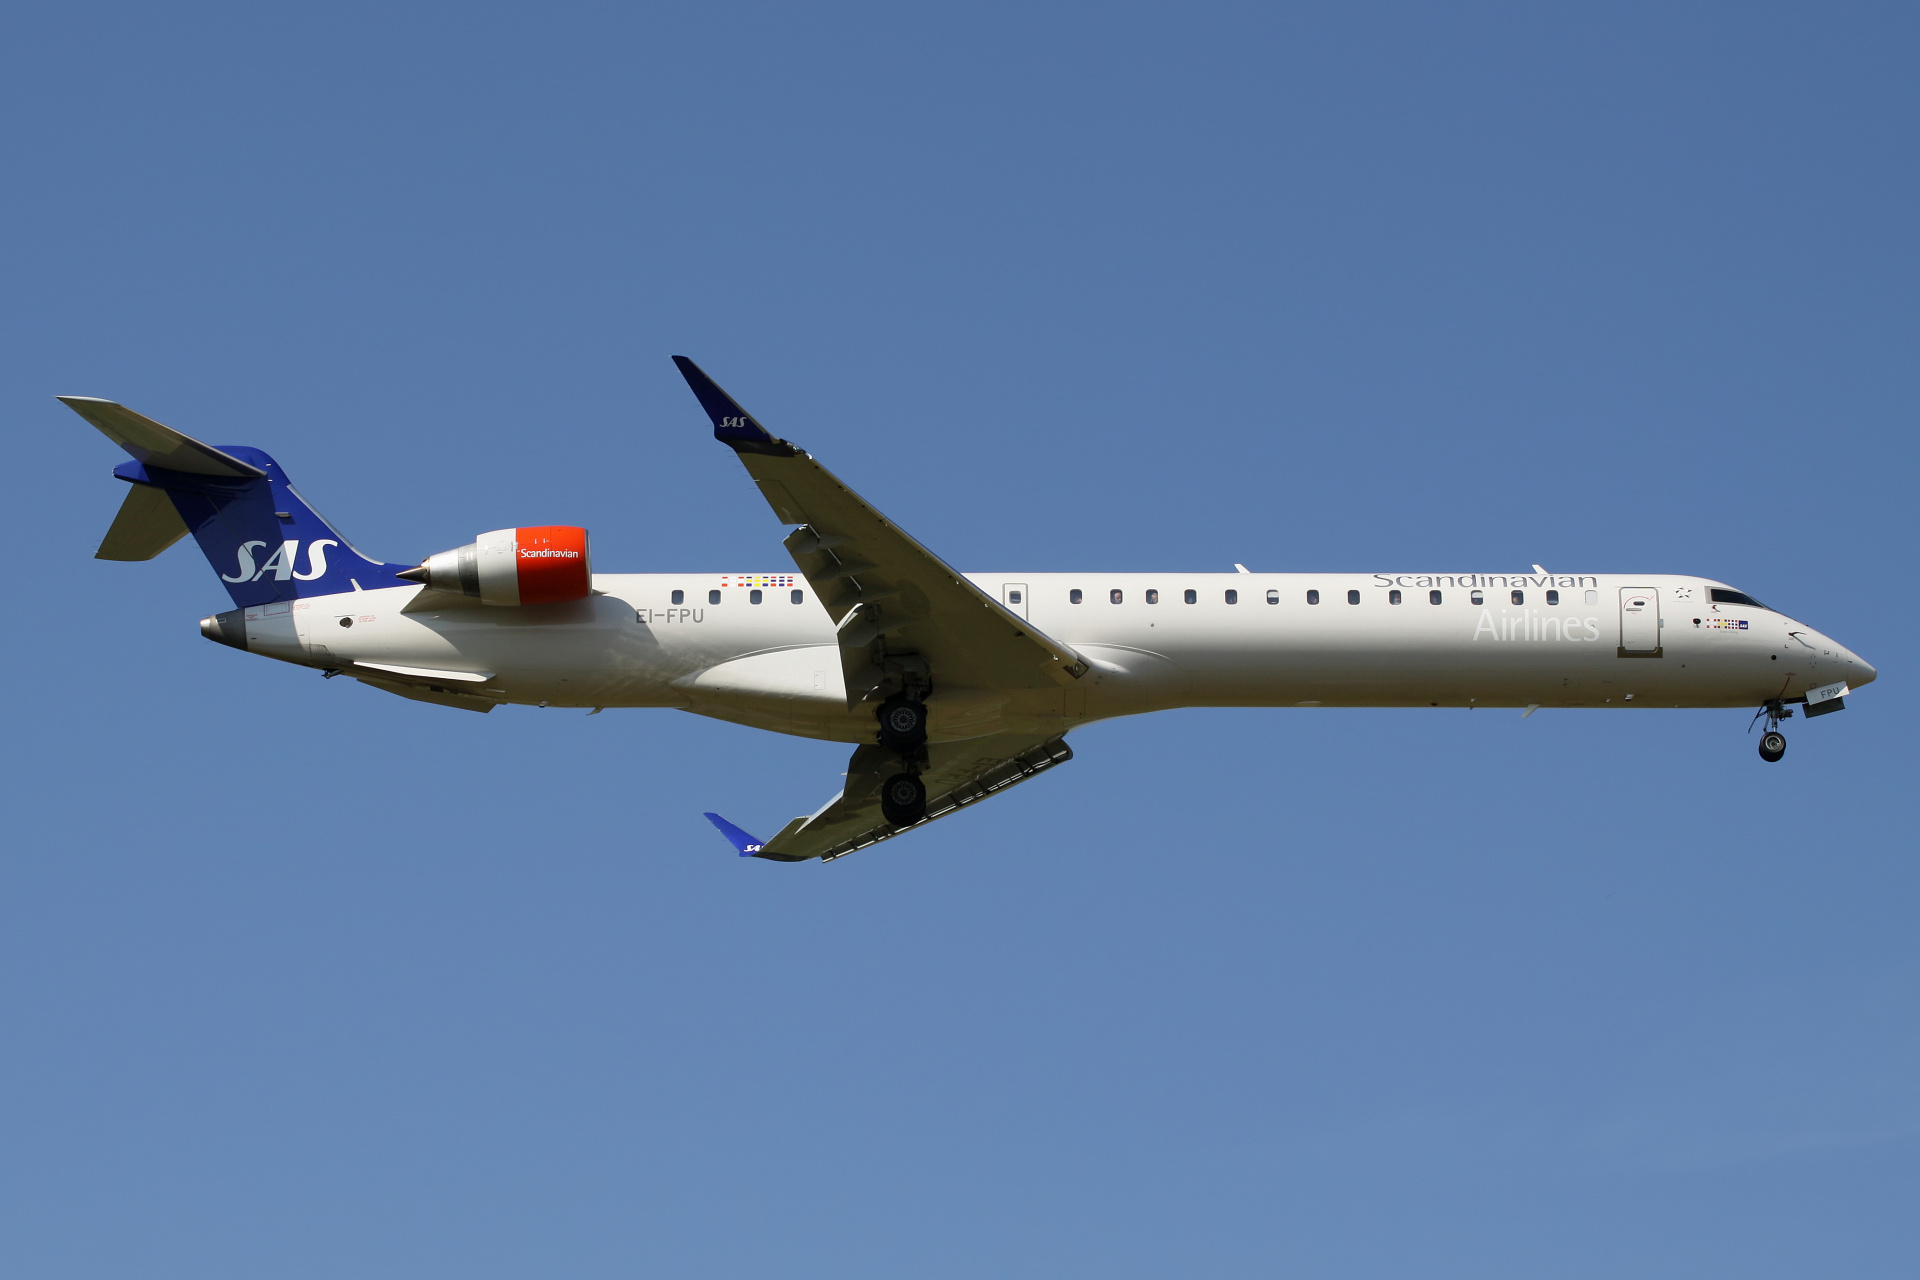 EI-FPU (Aircraft » EPWA Spotting » Mitsubishi Regional Jet » CRJ-900 » SAS Scandinavian Airlines)